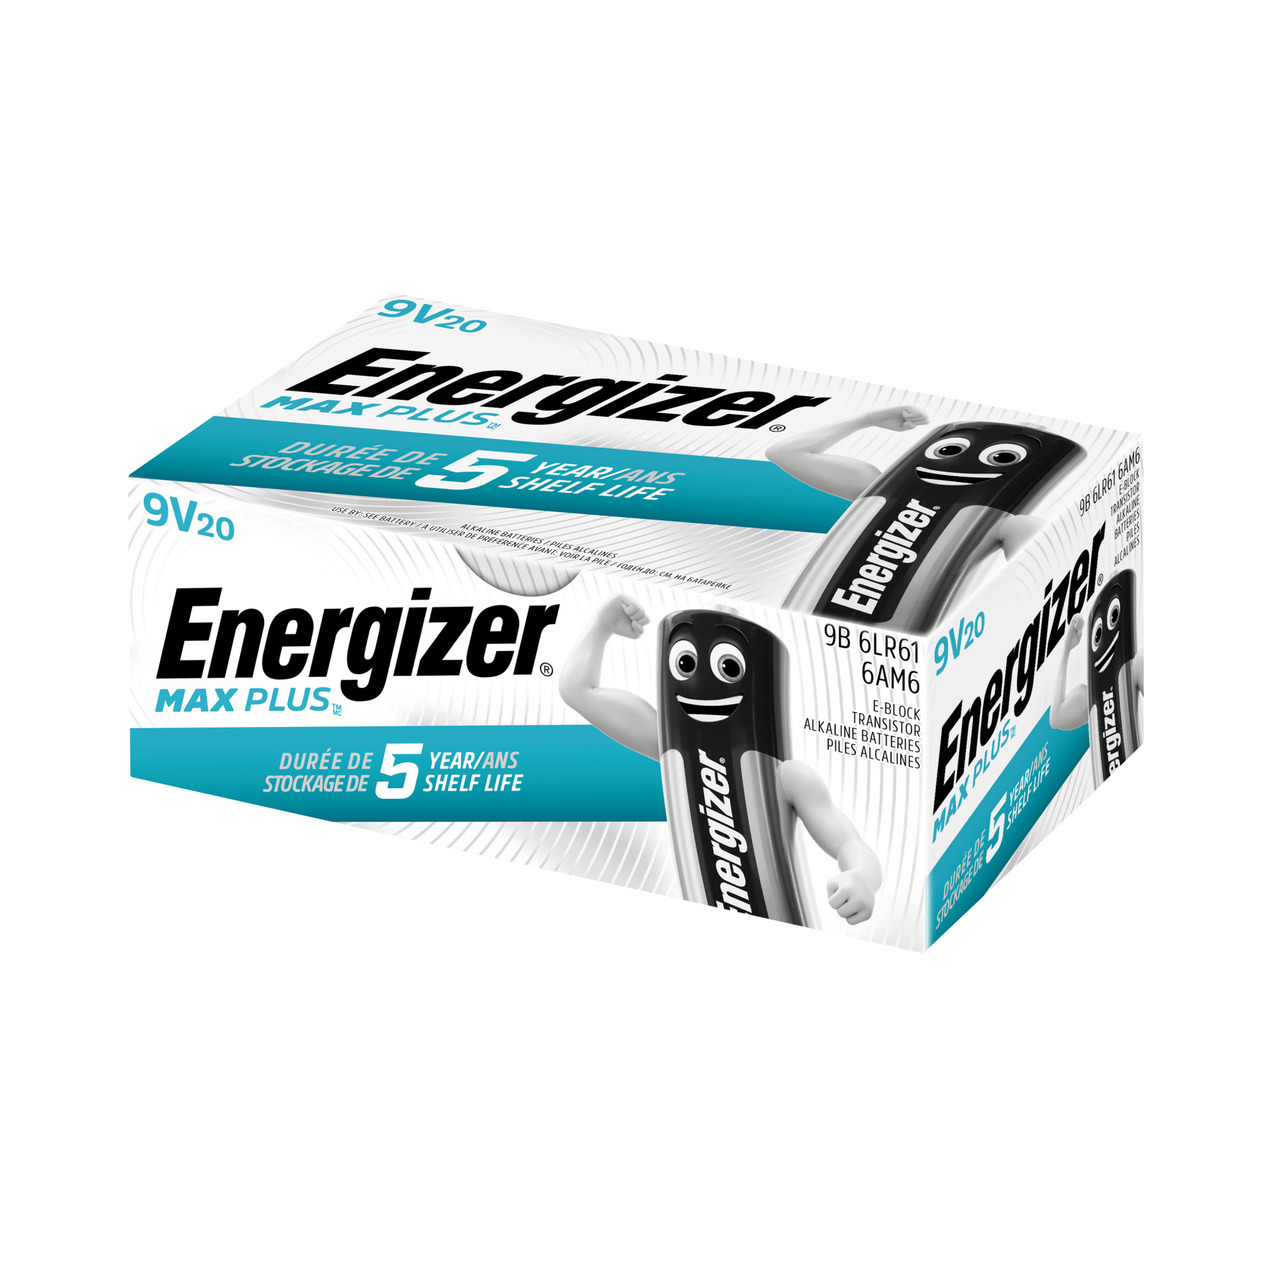 Energizer Alkaline-Batterien Max Plus E-Block (9V) 20er Pack